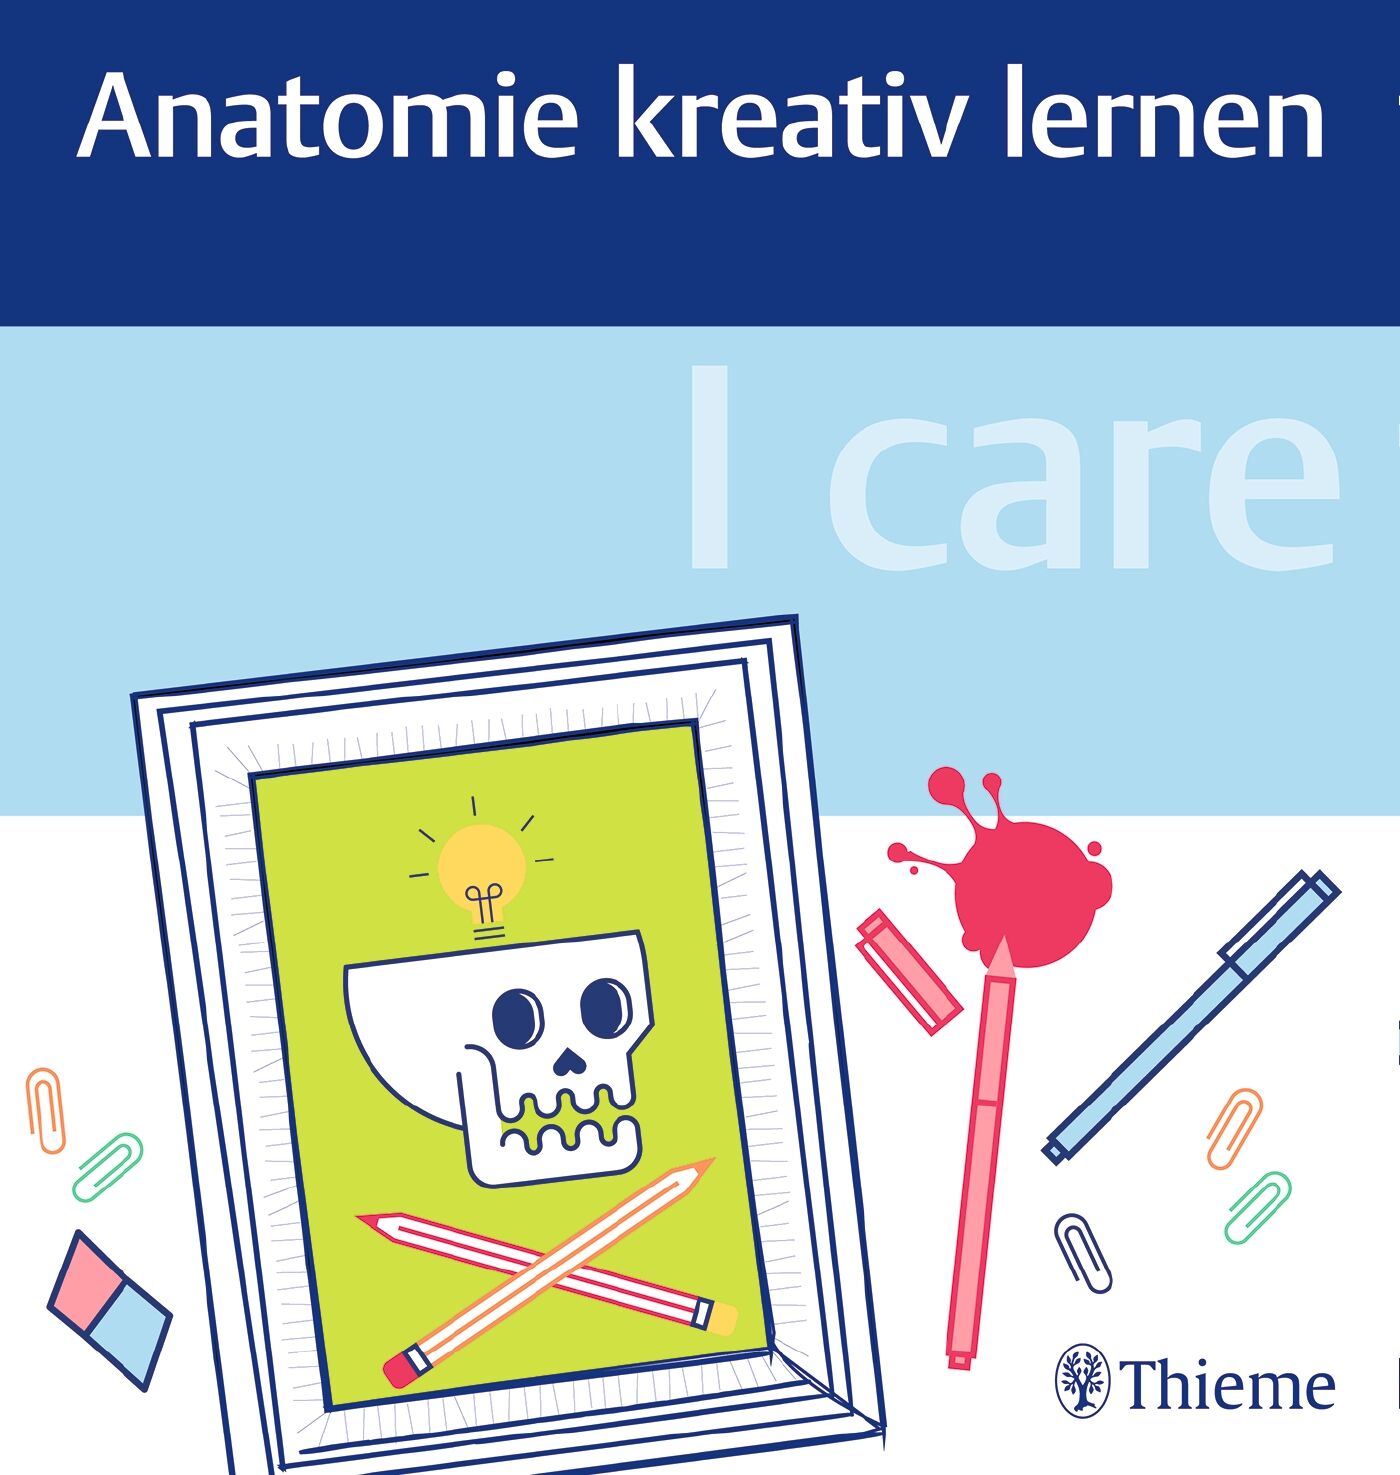 I care - Anatomie kreativ lernen, 9783132411708